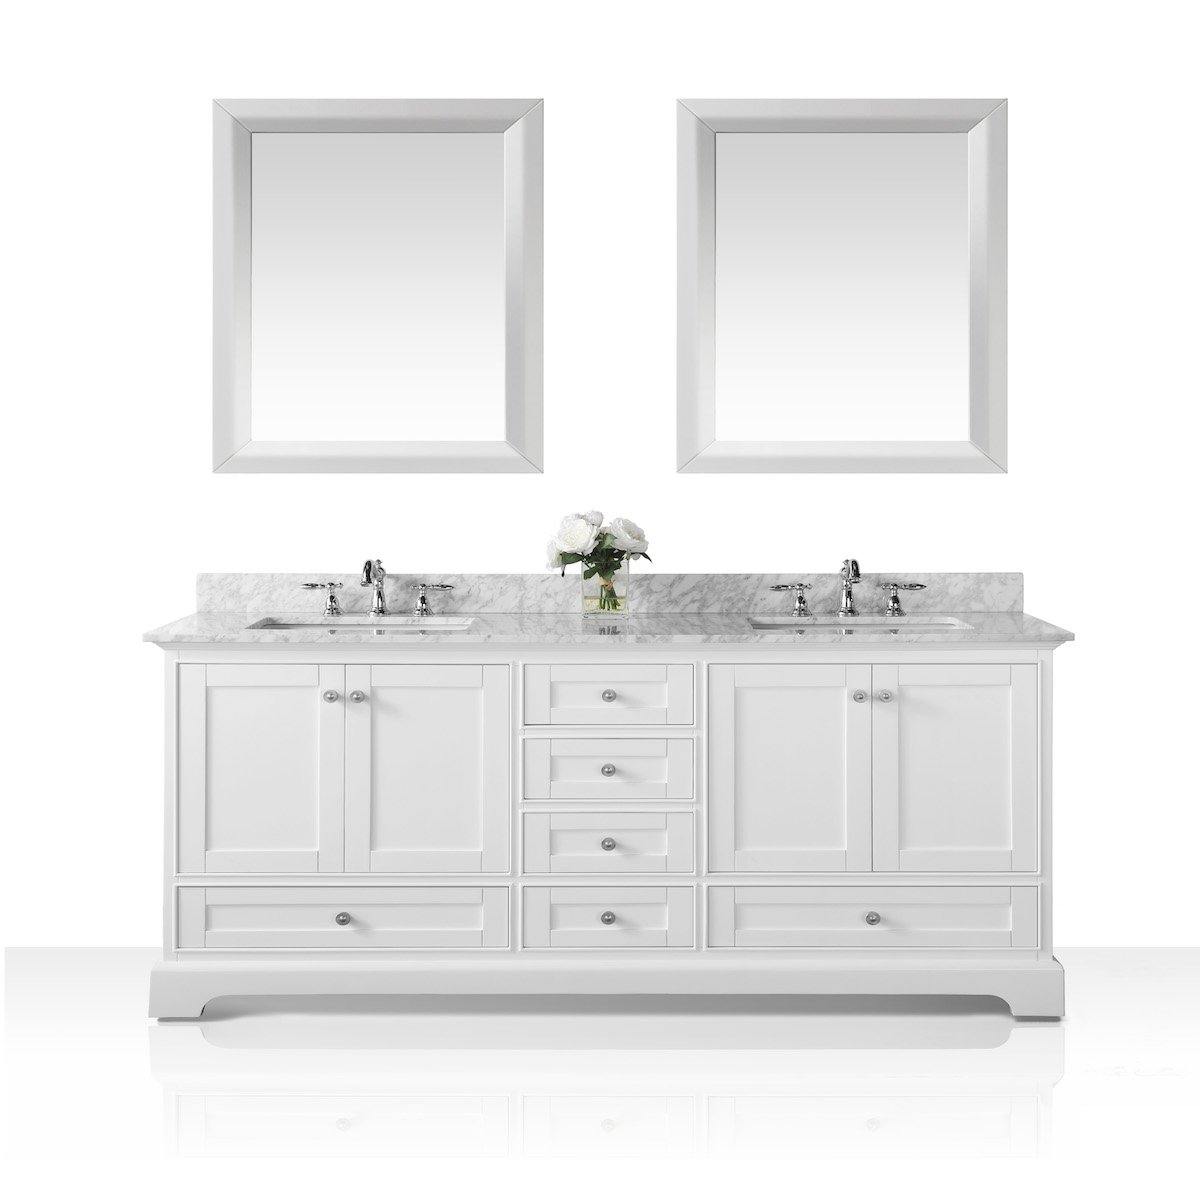 Ancerre Designs Audrey 72 Inch White Double Vanity